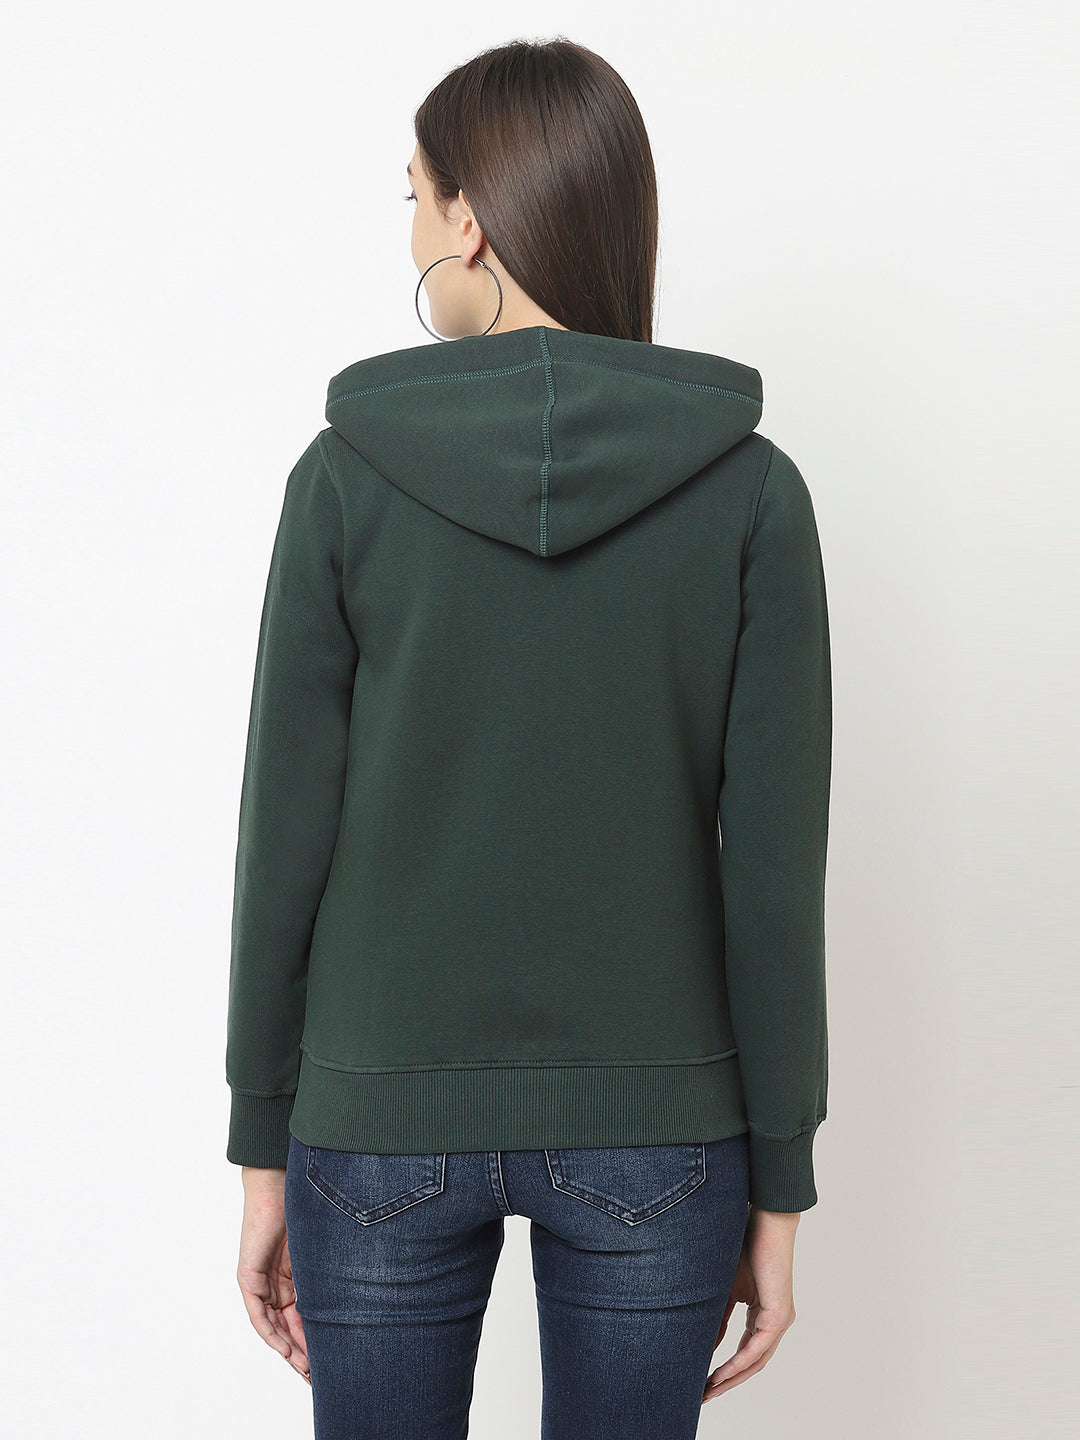 Dark Green Zipper Sweatshirt with Split Kangaroo Pocket 